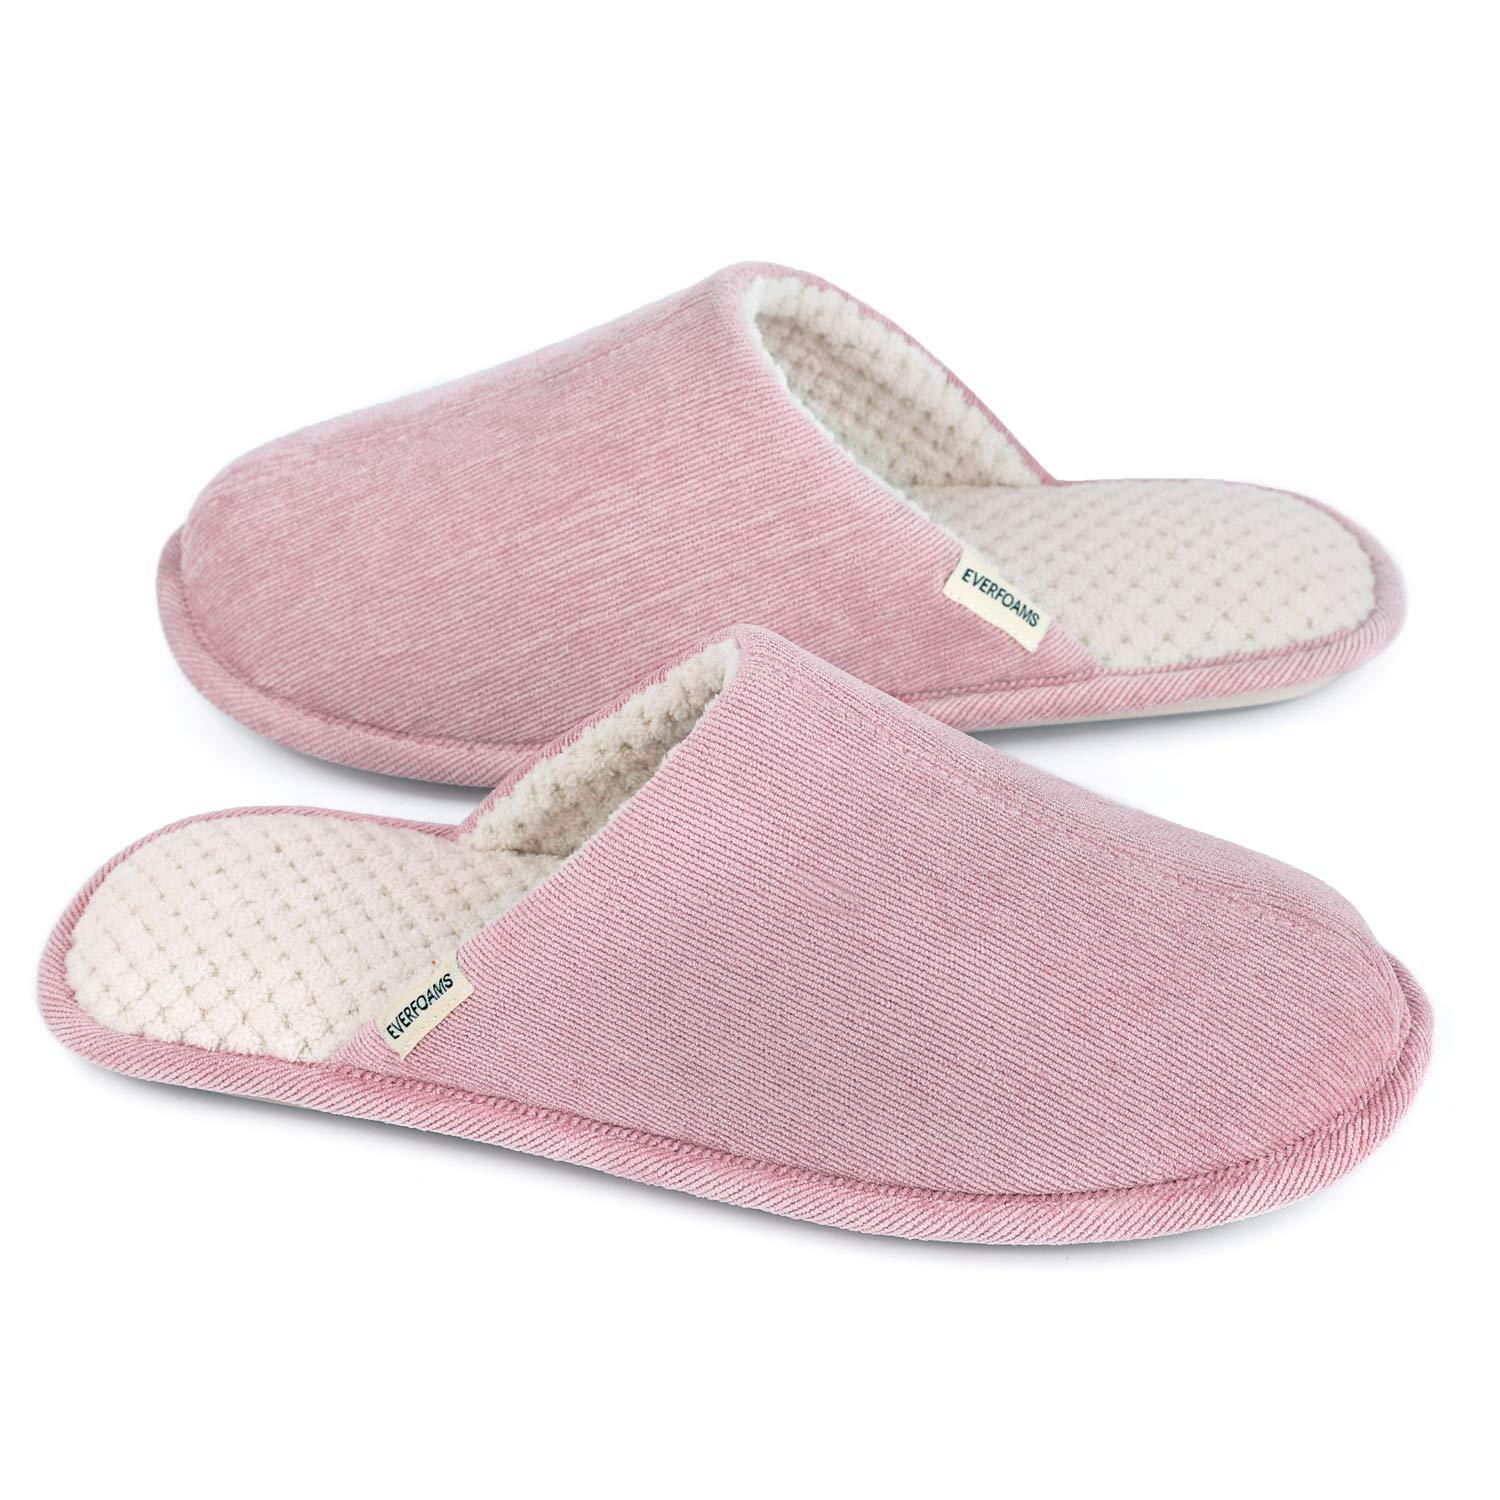 everfoam slippers